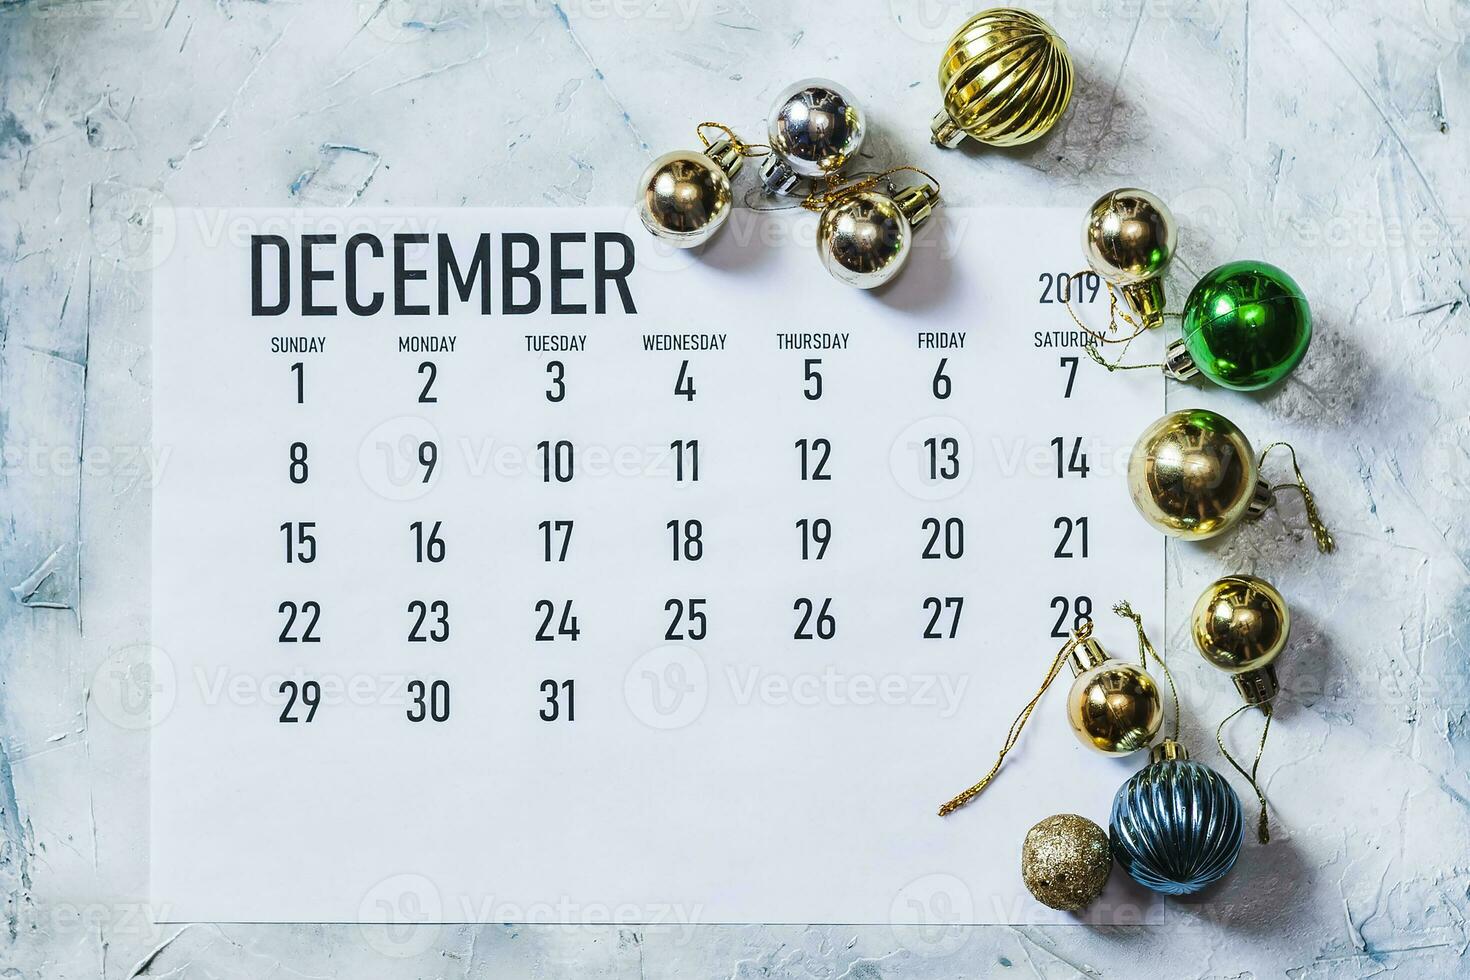 December 2019 monthly Calendar photo